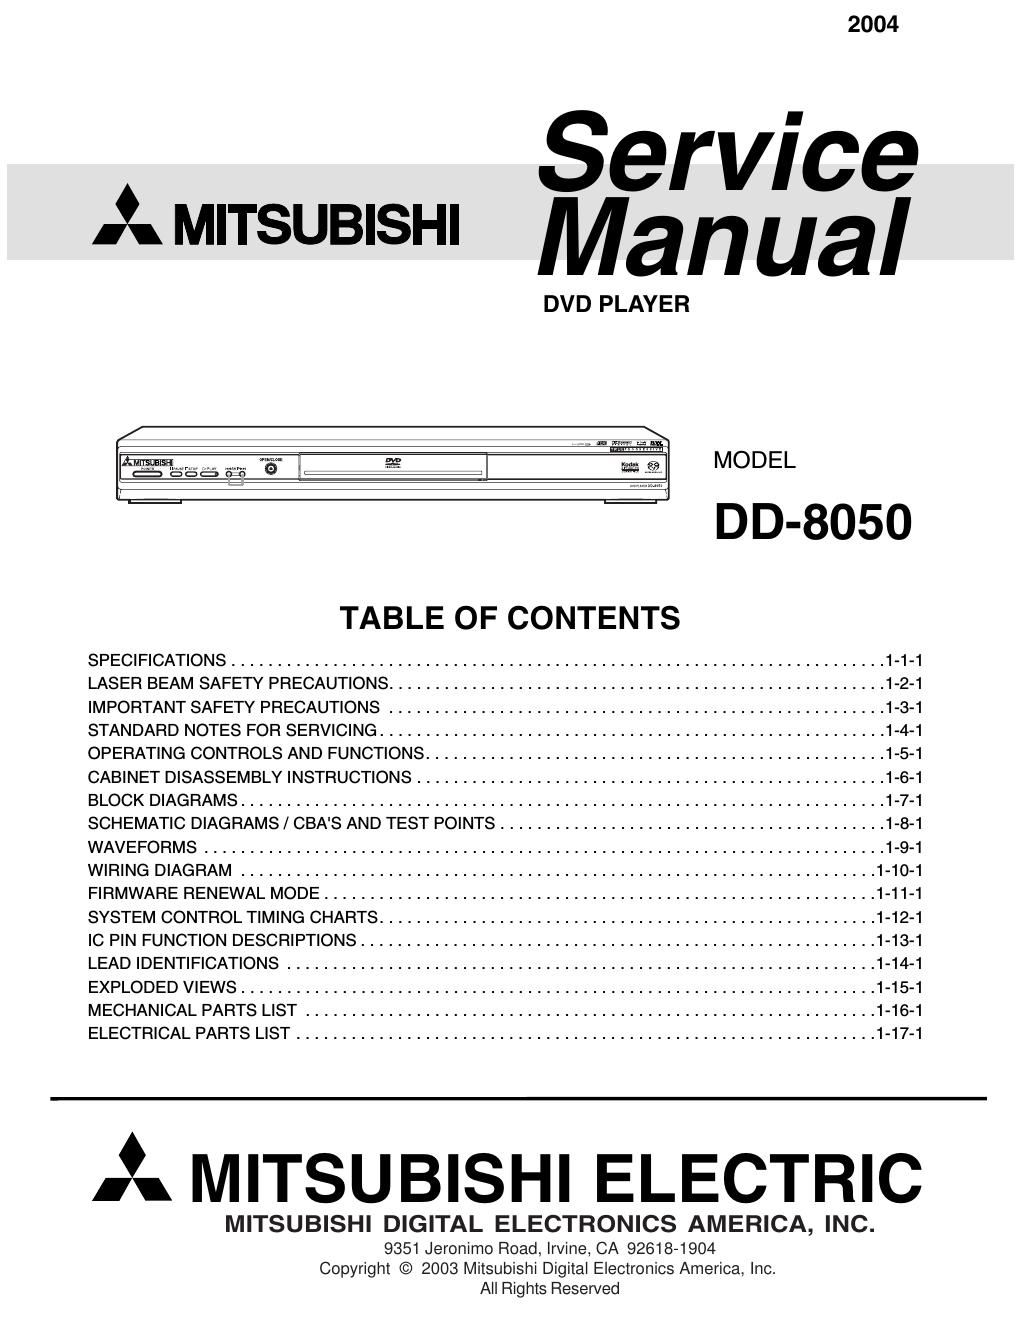 mitsubishi dd 8050 service manual